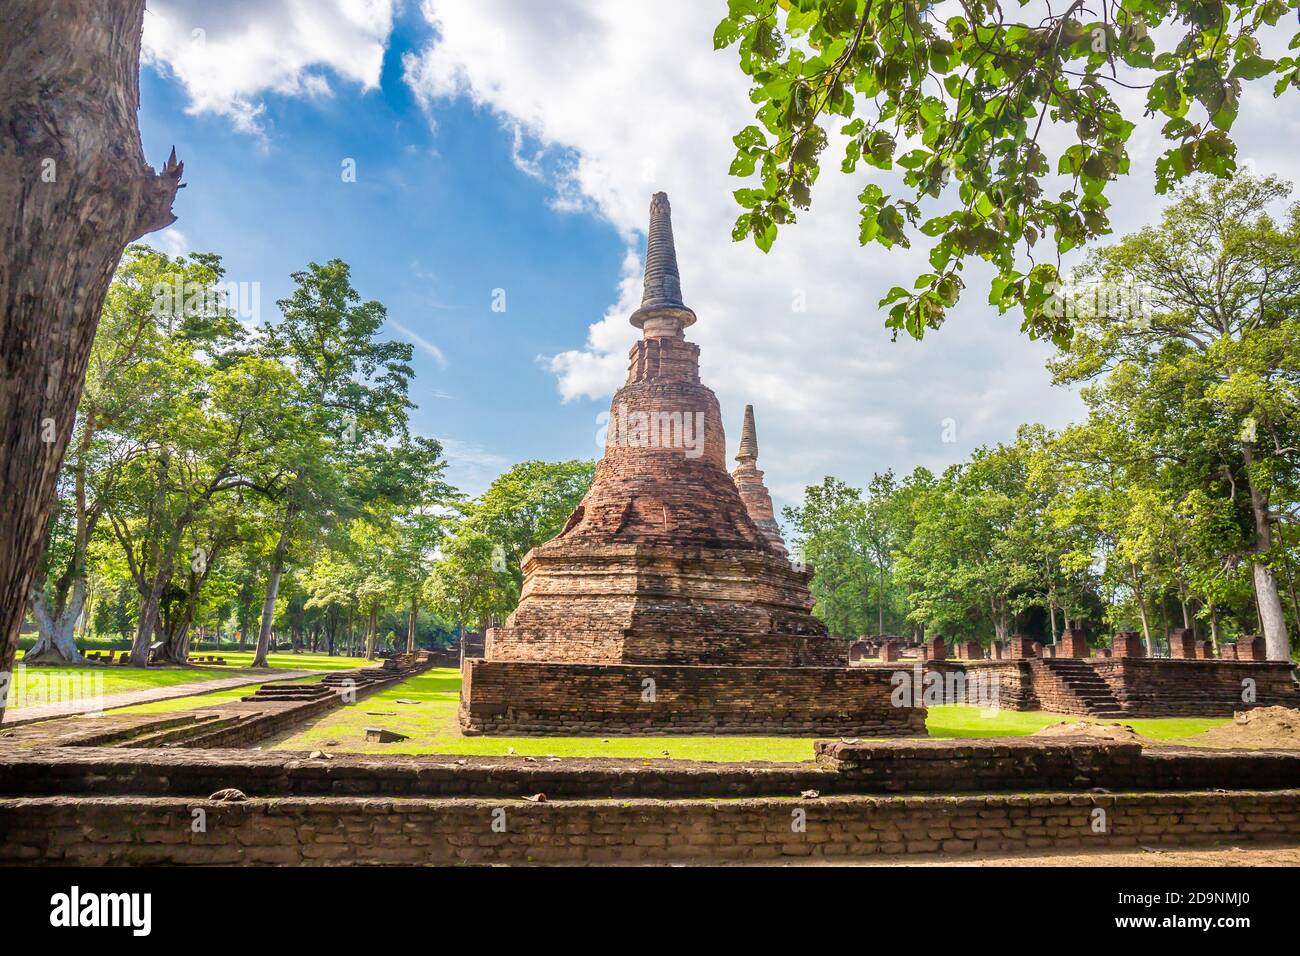 Landmark of old chedi made of ancient bricks in the Kamphaeng Phet Historical Park, Thailand. Stock Photo